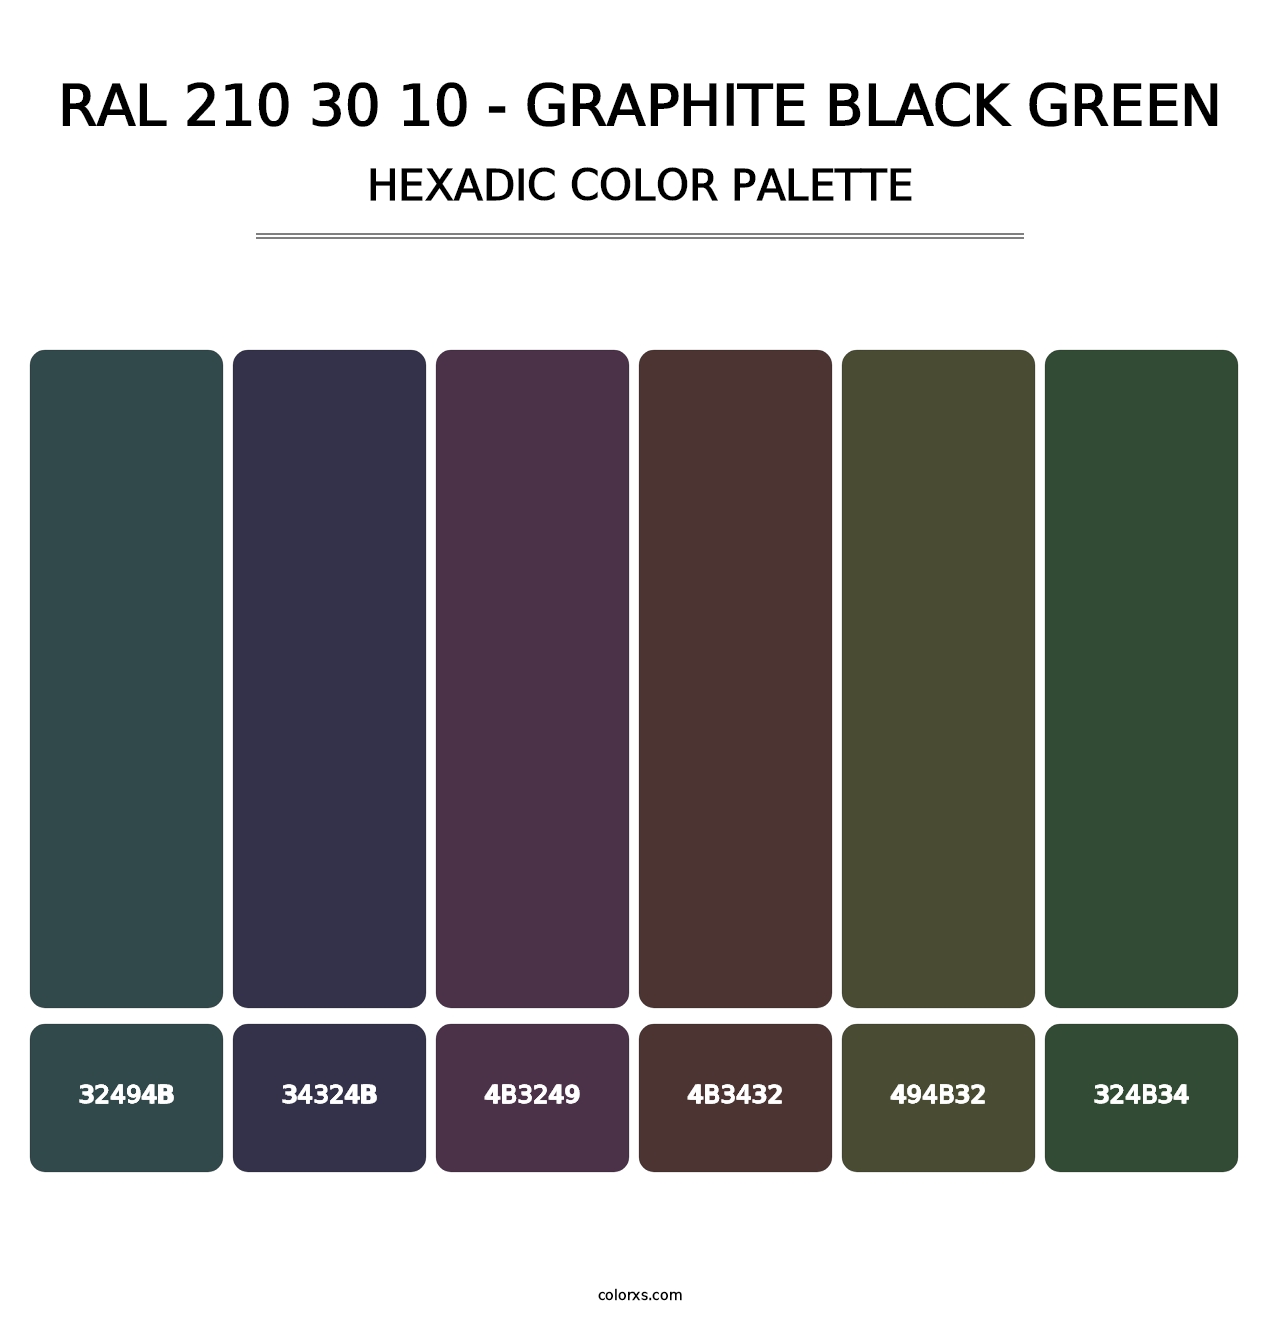 RAL 210 30 10 - Graphite Black Green - Hexadic Color Palette